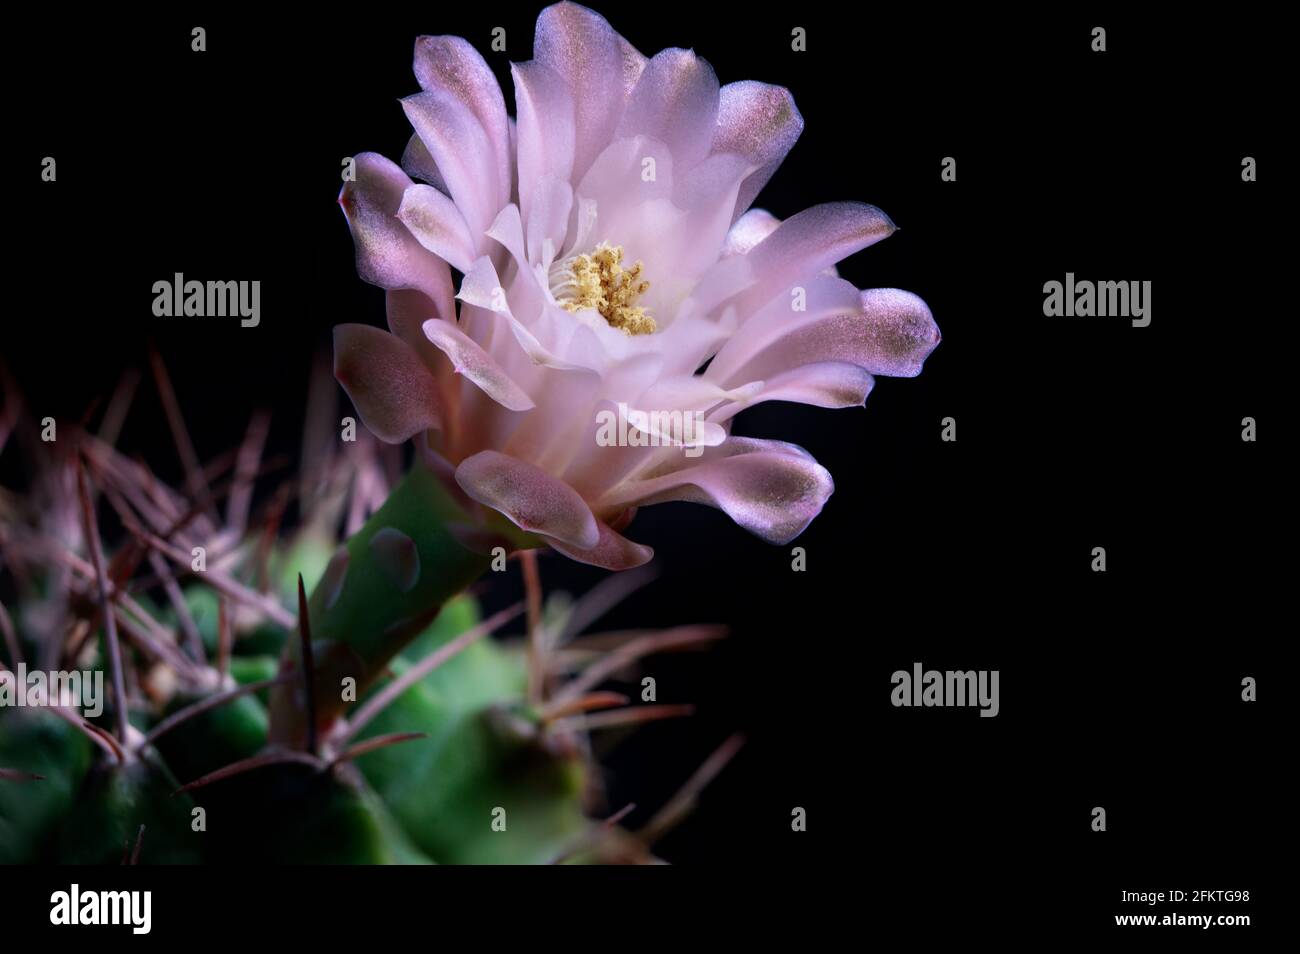 close up pink flower of gymnocalycium cactus against dark background Stock Photo